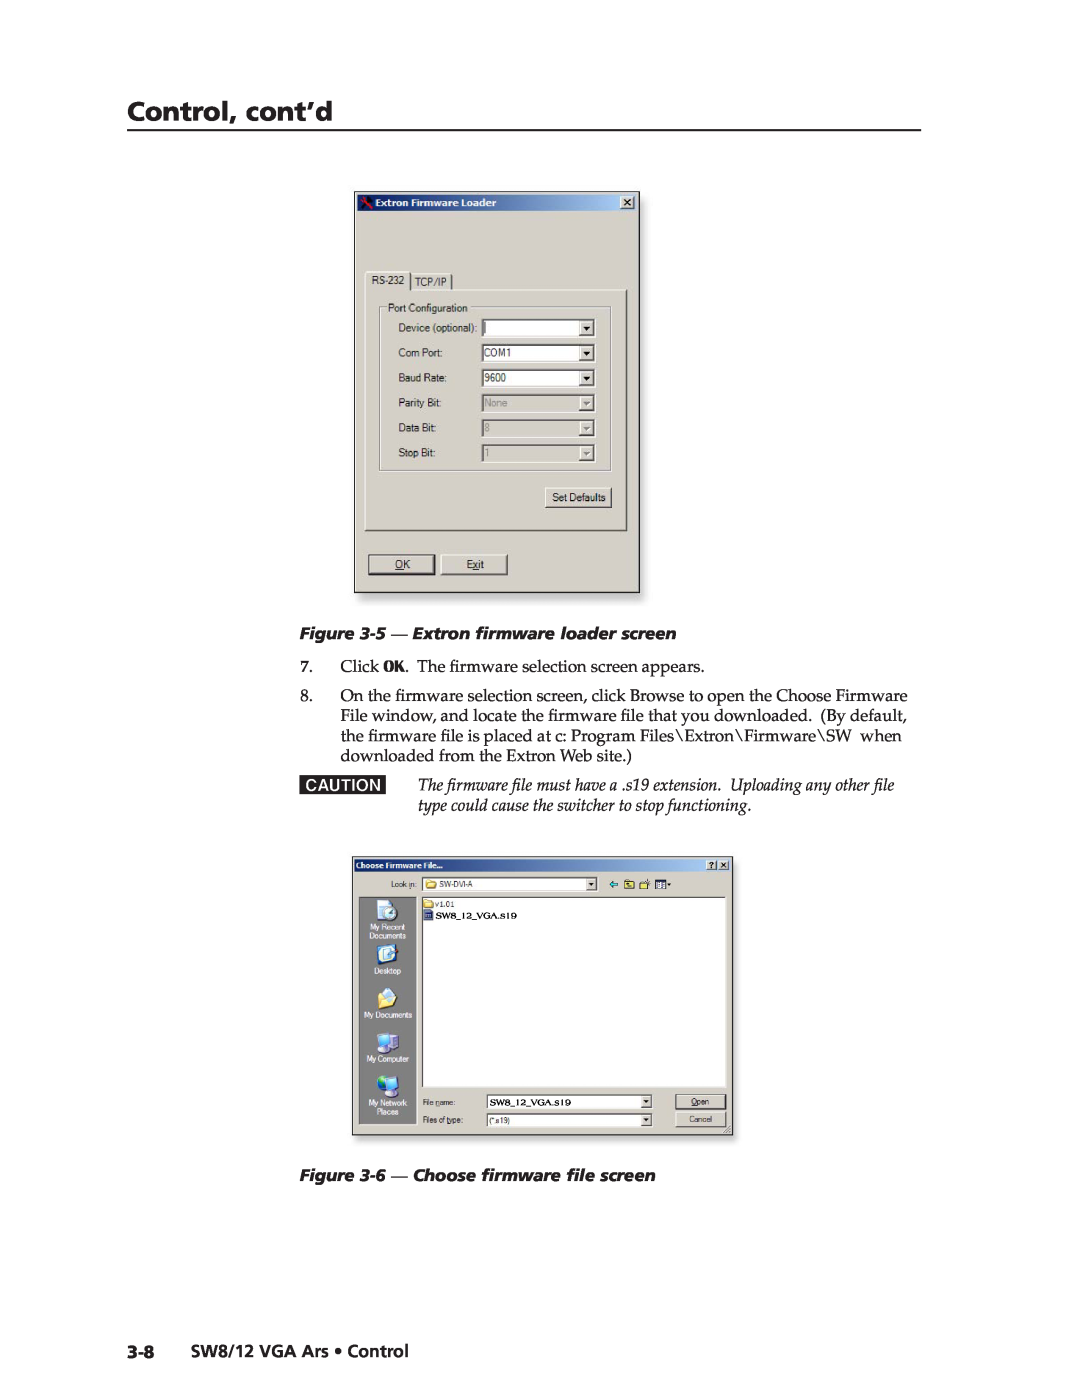 Extron electronic SW8 VGA Ars manual 5 - Extron firmware loader screen, 6 - Choose firmware file screen, Control, cont’d 